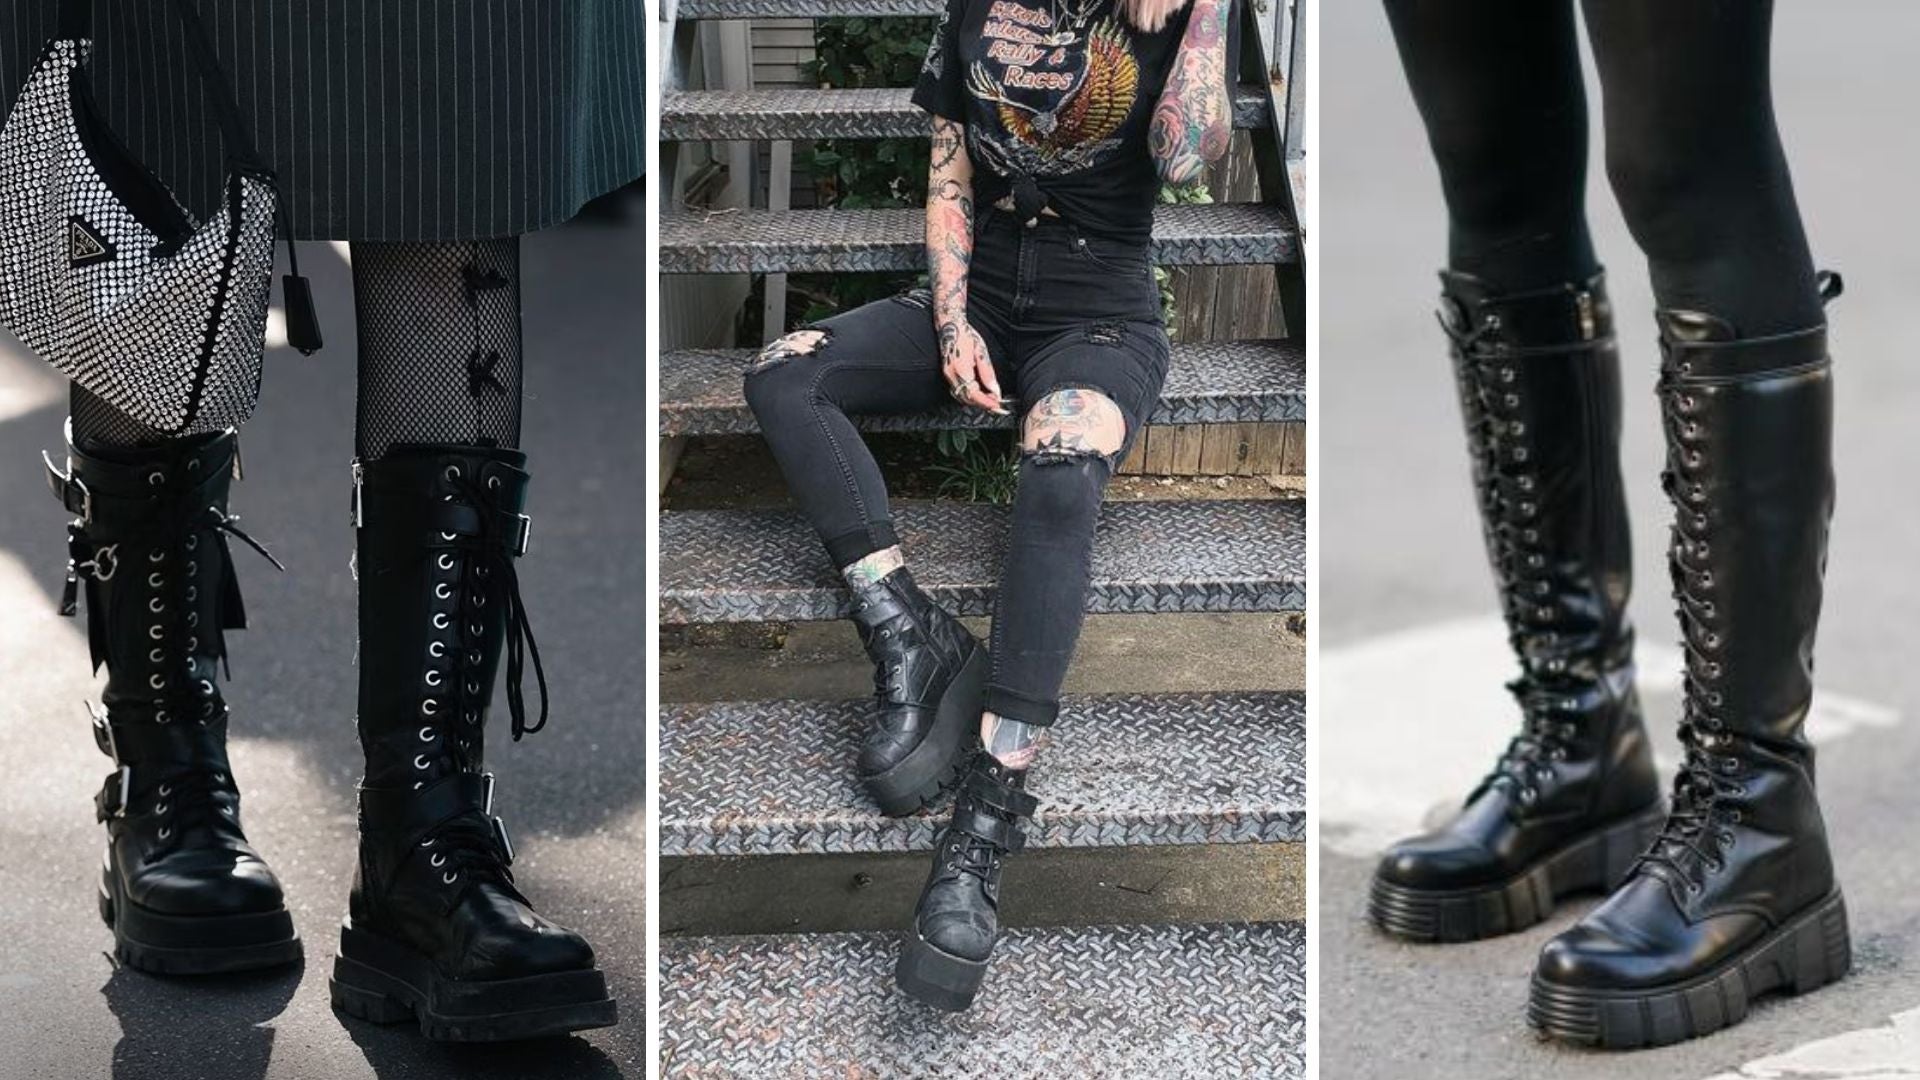 Punk Rock Winter Footwear Boots That Make A Statement